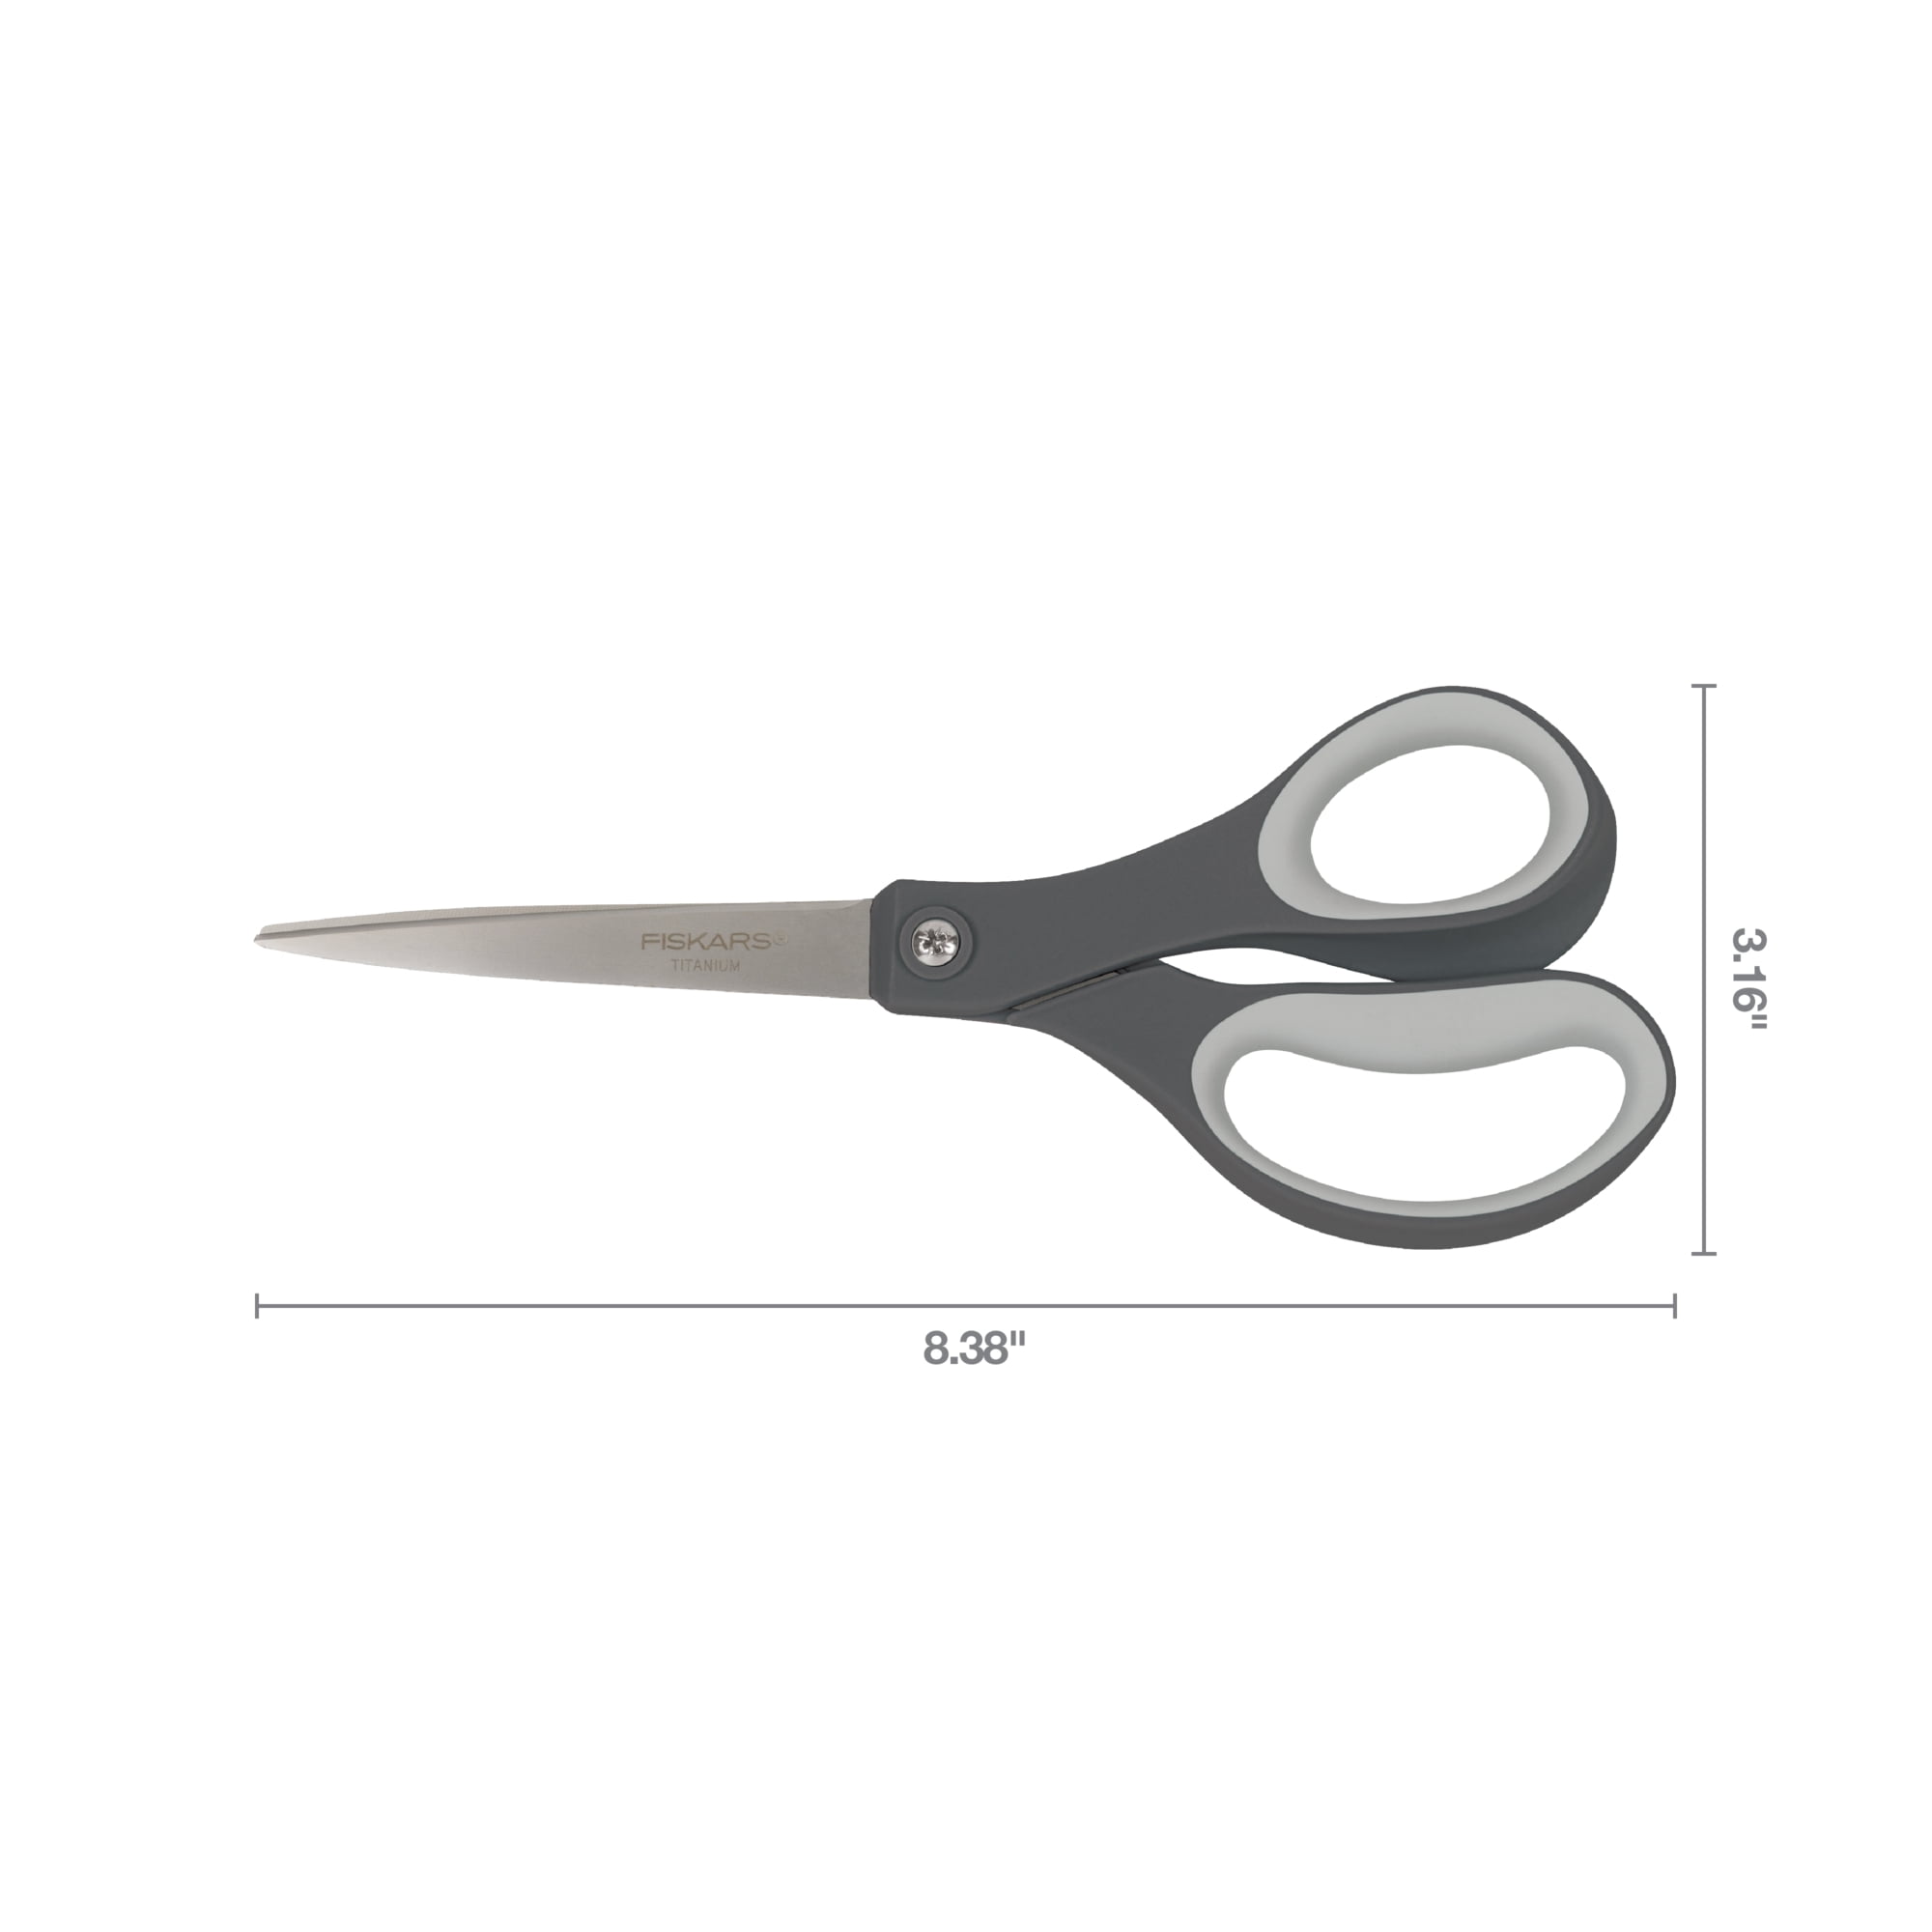 Fiskars Scissors (142500), Gray, 8 Inches